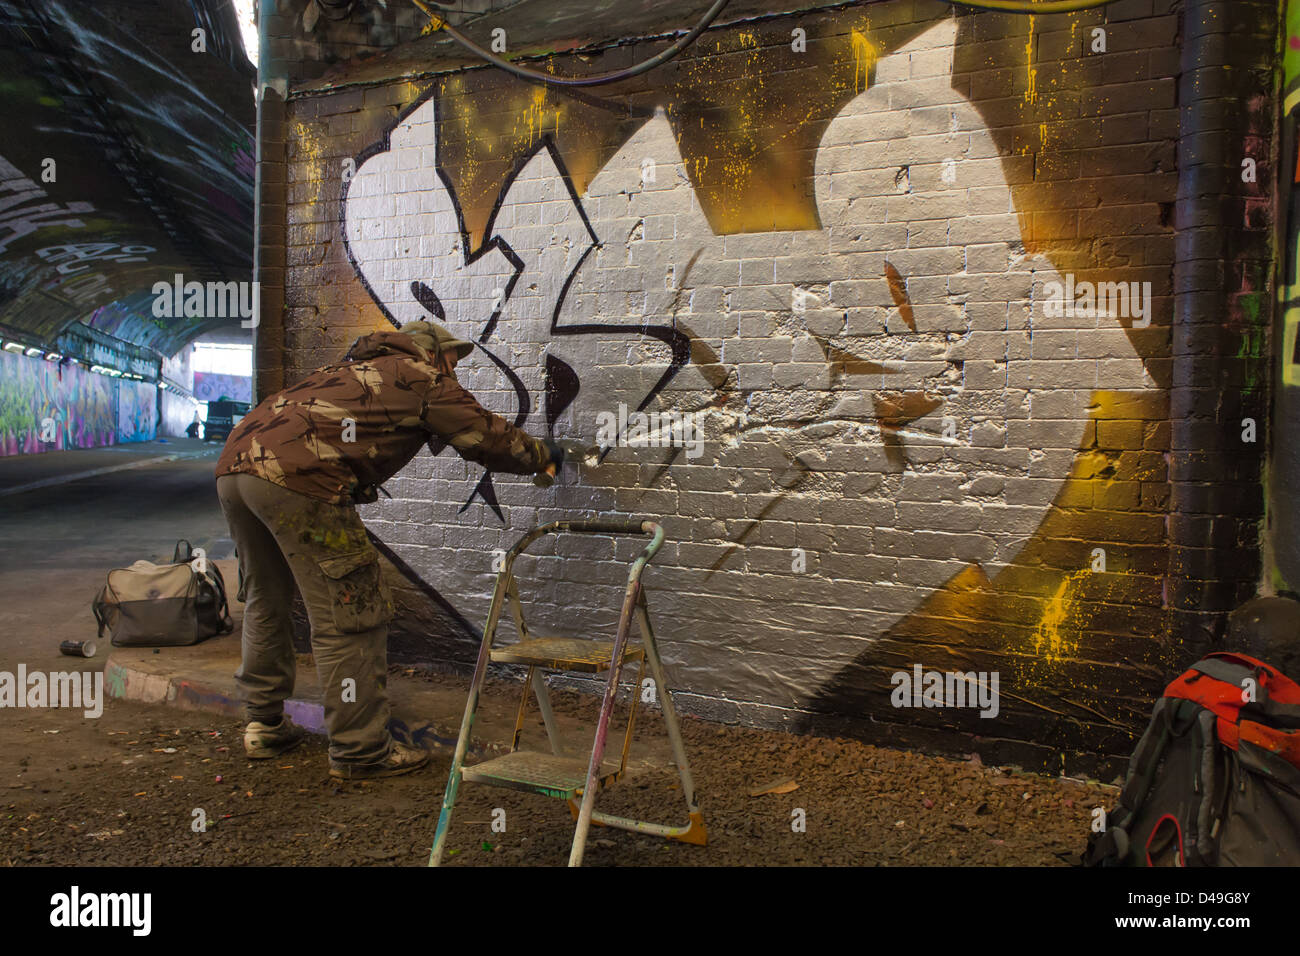 Graffiti artist at work Stock Photo